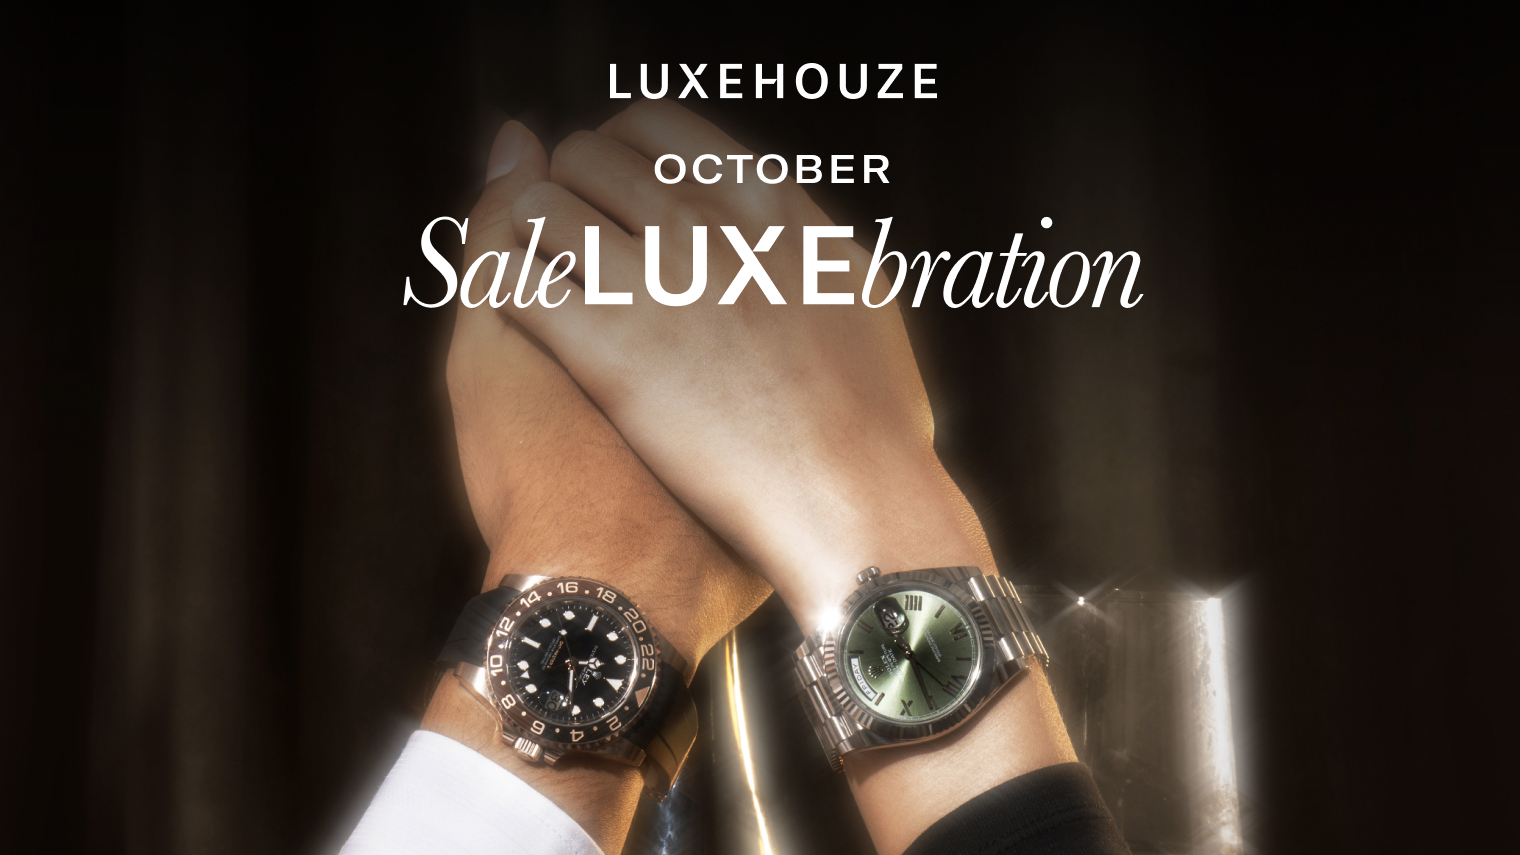 Luxehouze SaleLUXEbration October